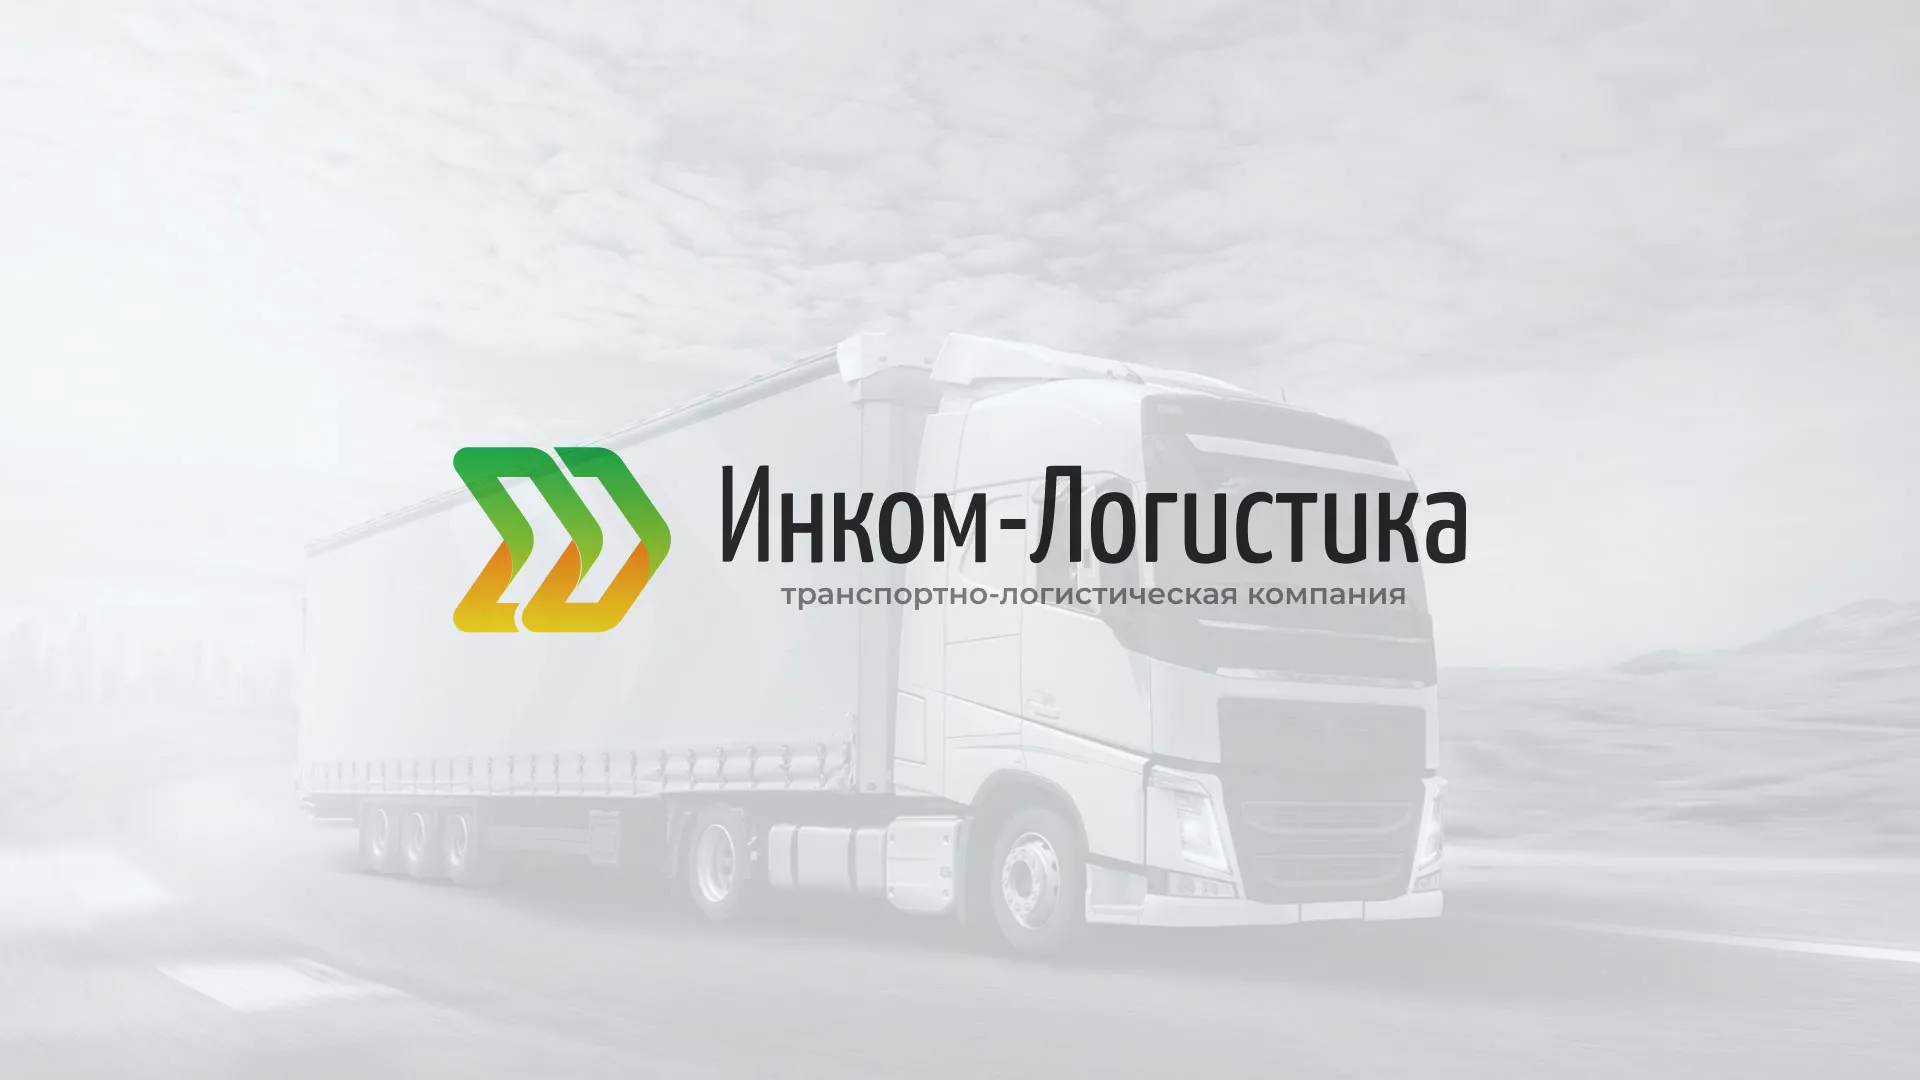 Разработка логотипа и сайта компании «Инком-Логистика» в Волжске